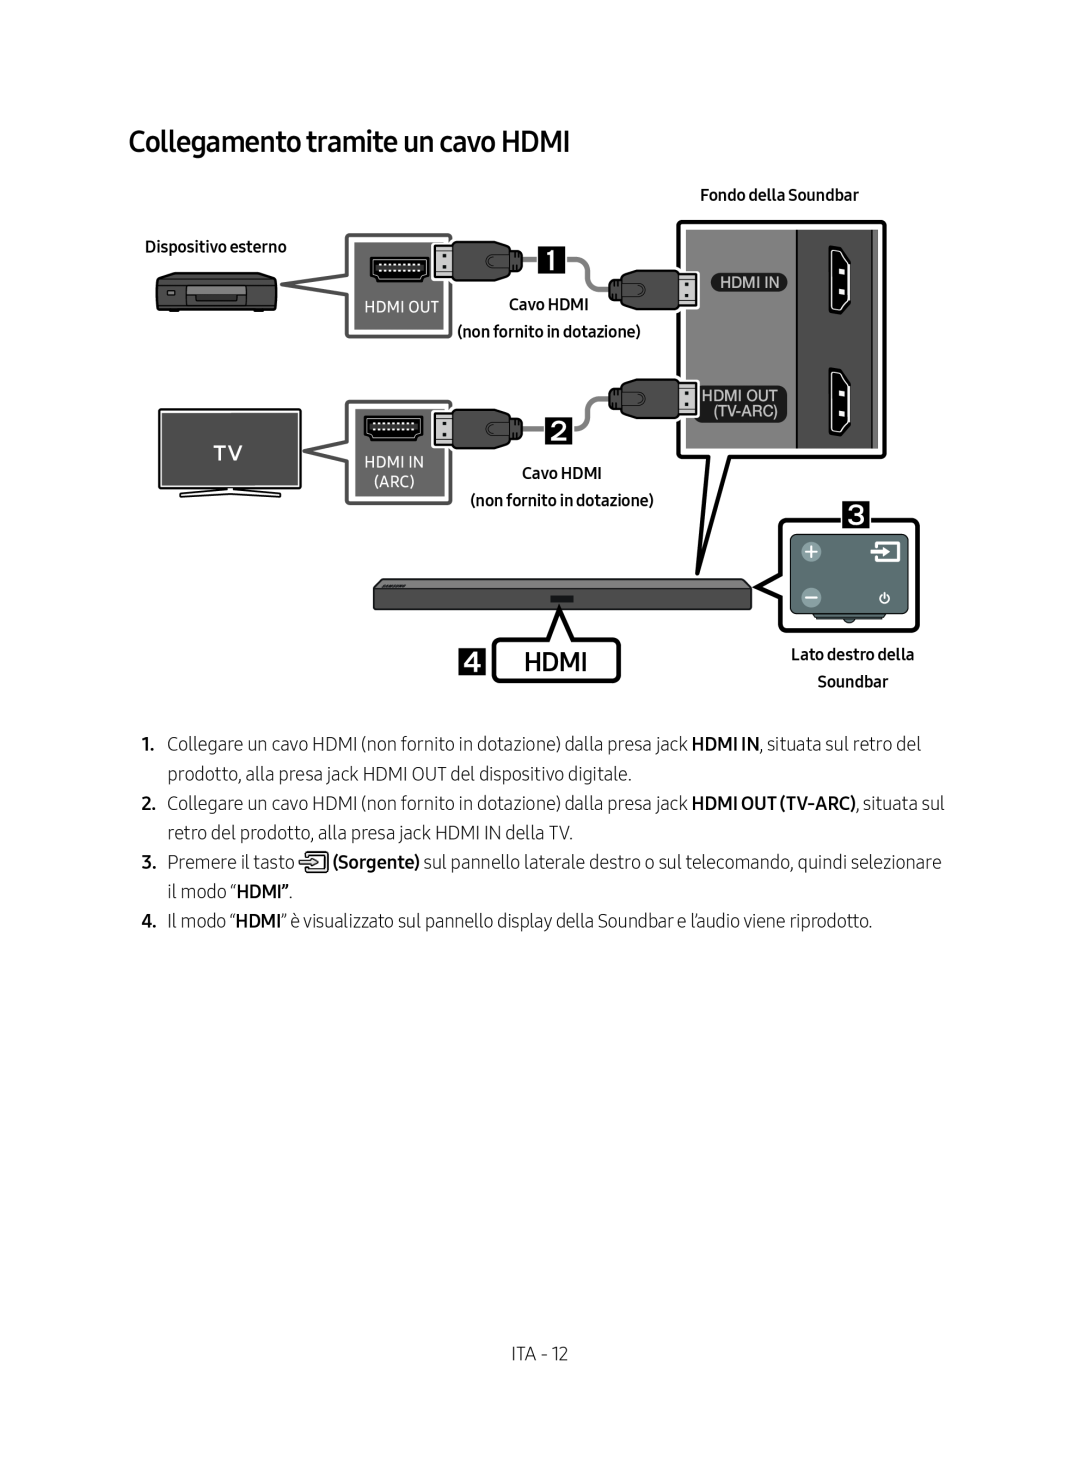 Samsung HW-M450/EN, HW-M450/ZG, HW-M450/ZF manual Collegamento tramite un cavo HDMI,  Hdmi, Tv-Arc 